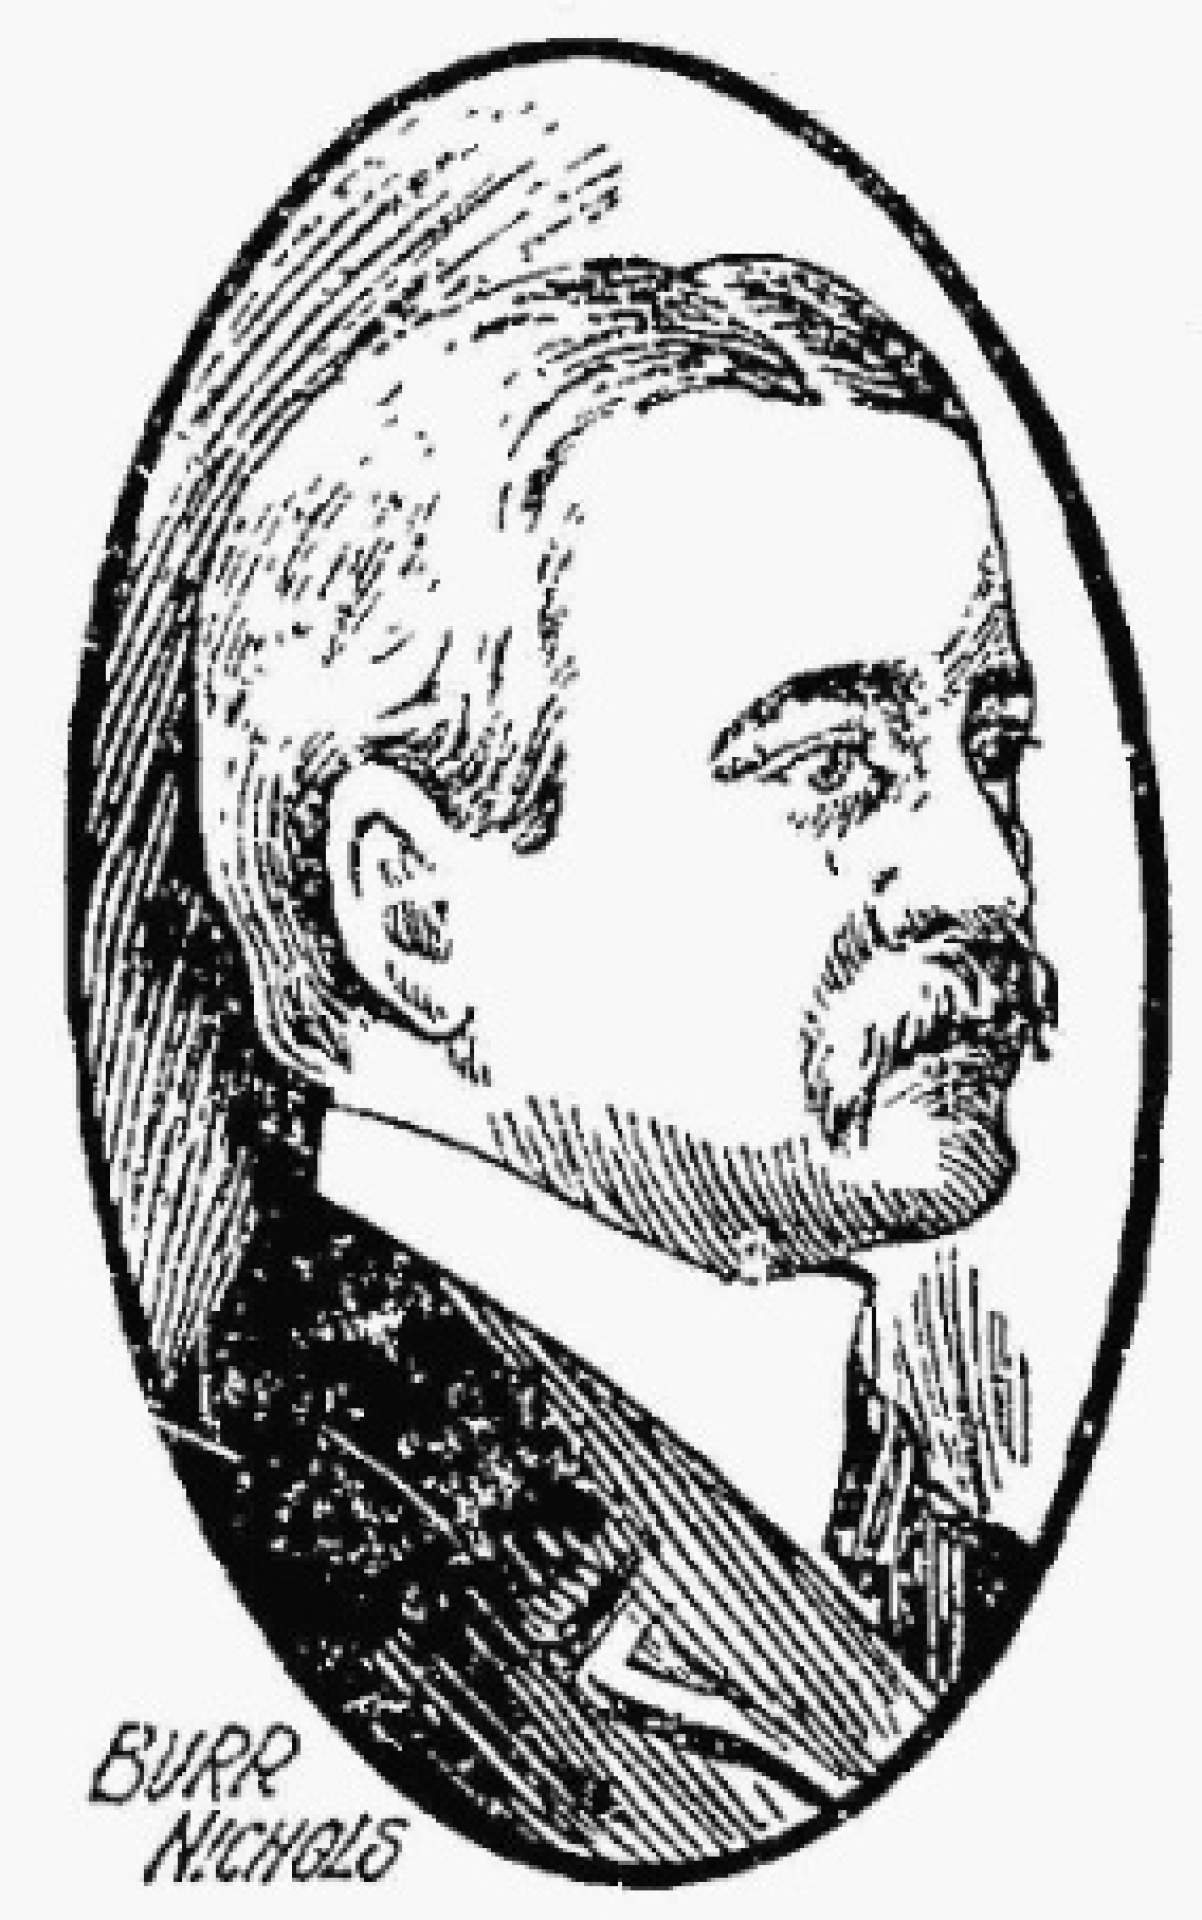 Burr H. Nicholls